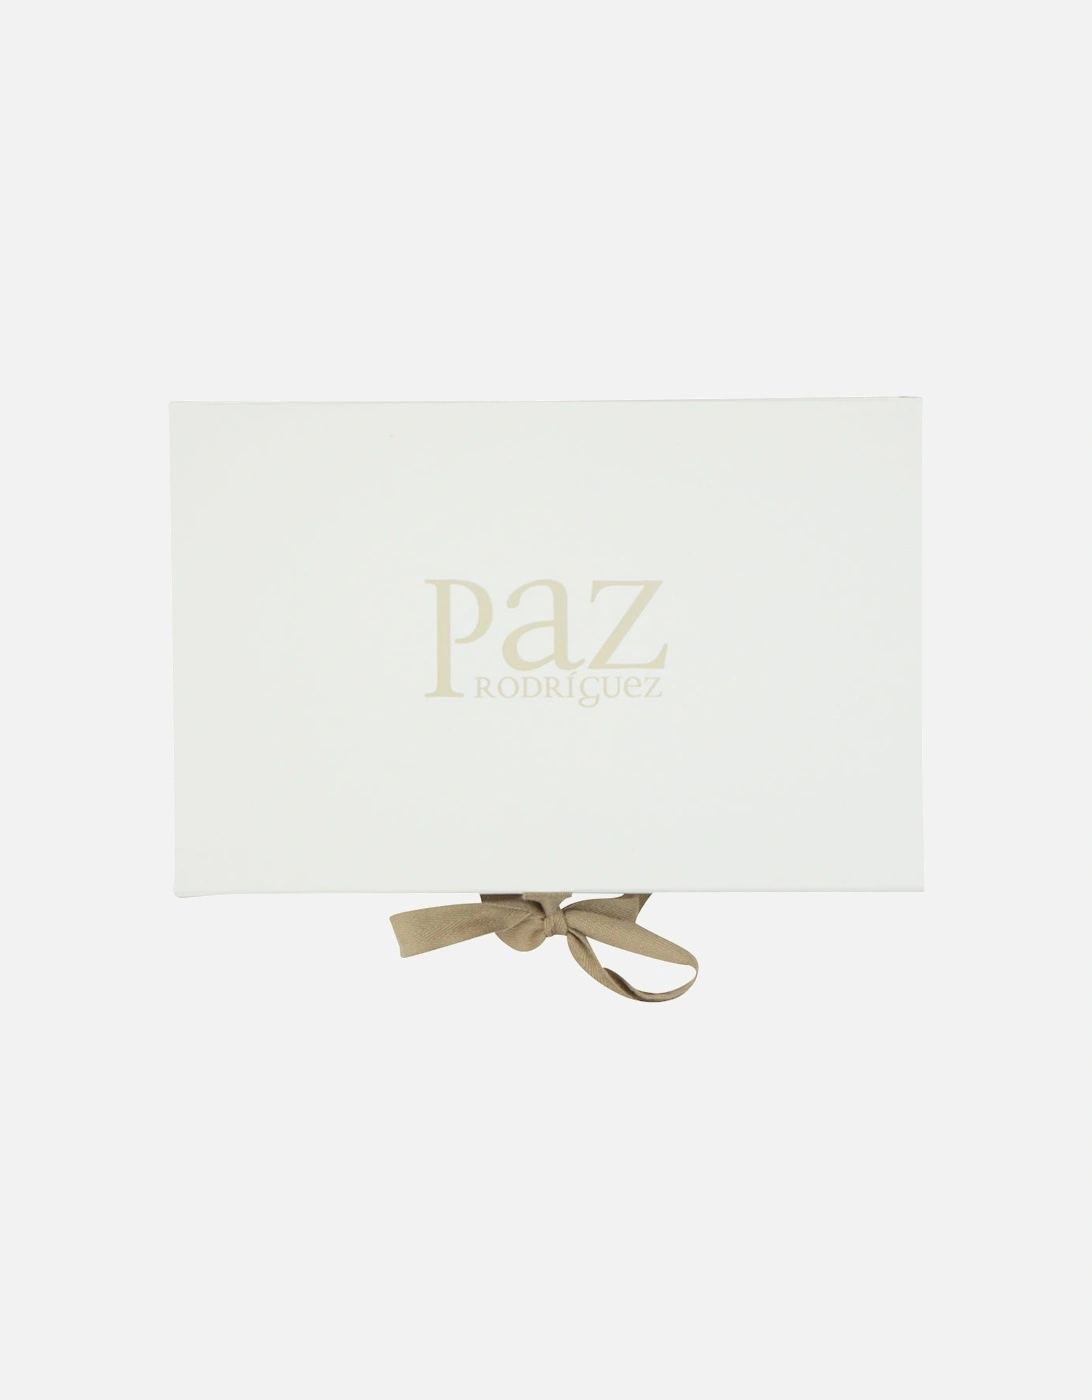 Paz Rodriguez Unisex Baby 4 Piece Gift Set White